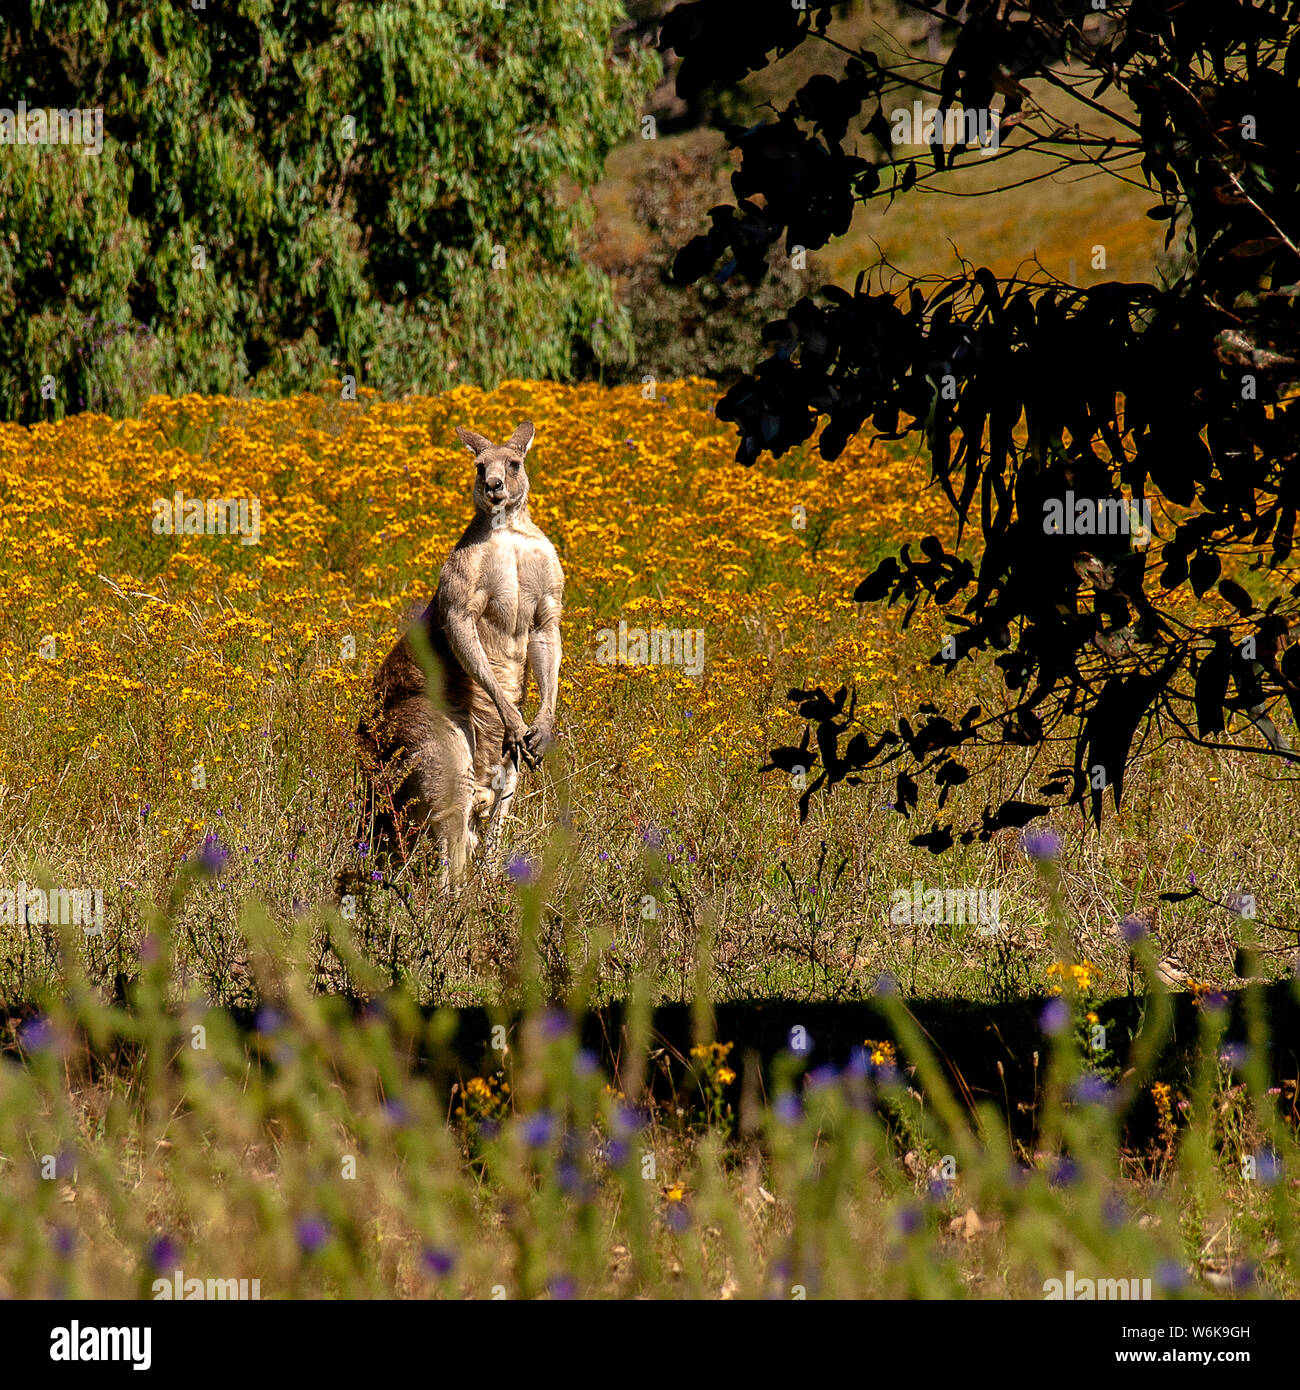 Australia: Male Eastern Grey kangaroo on alert in field of wildflowers Stock Photo